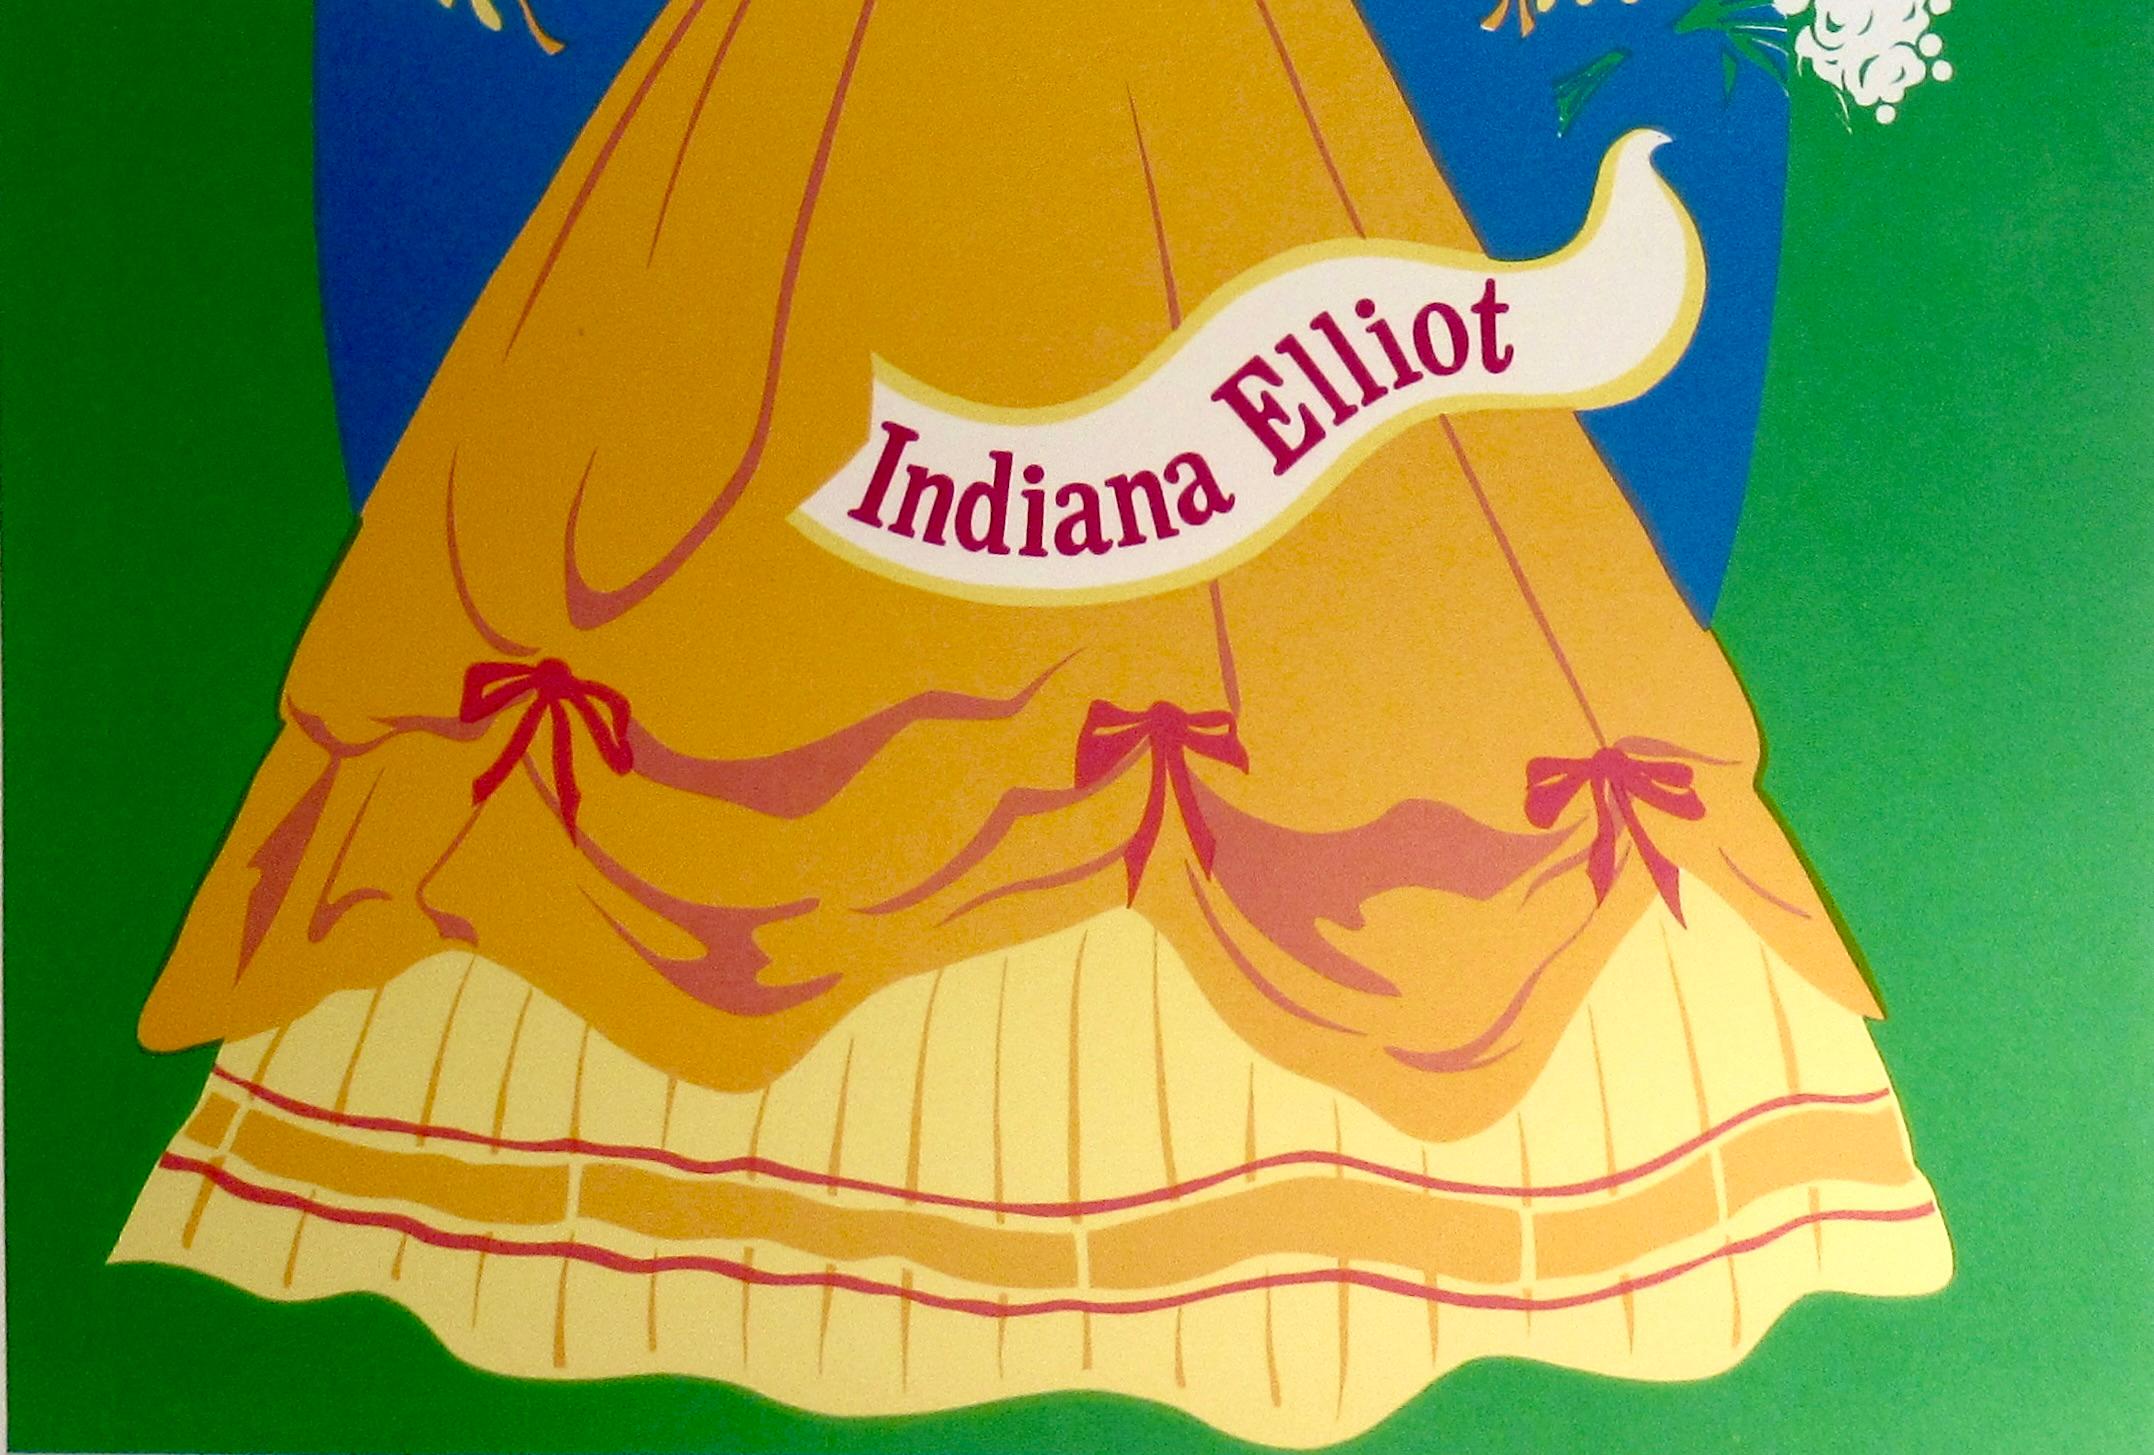 Indiana Elliot - Pop Art Print by Robert Indiana